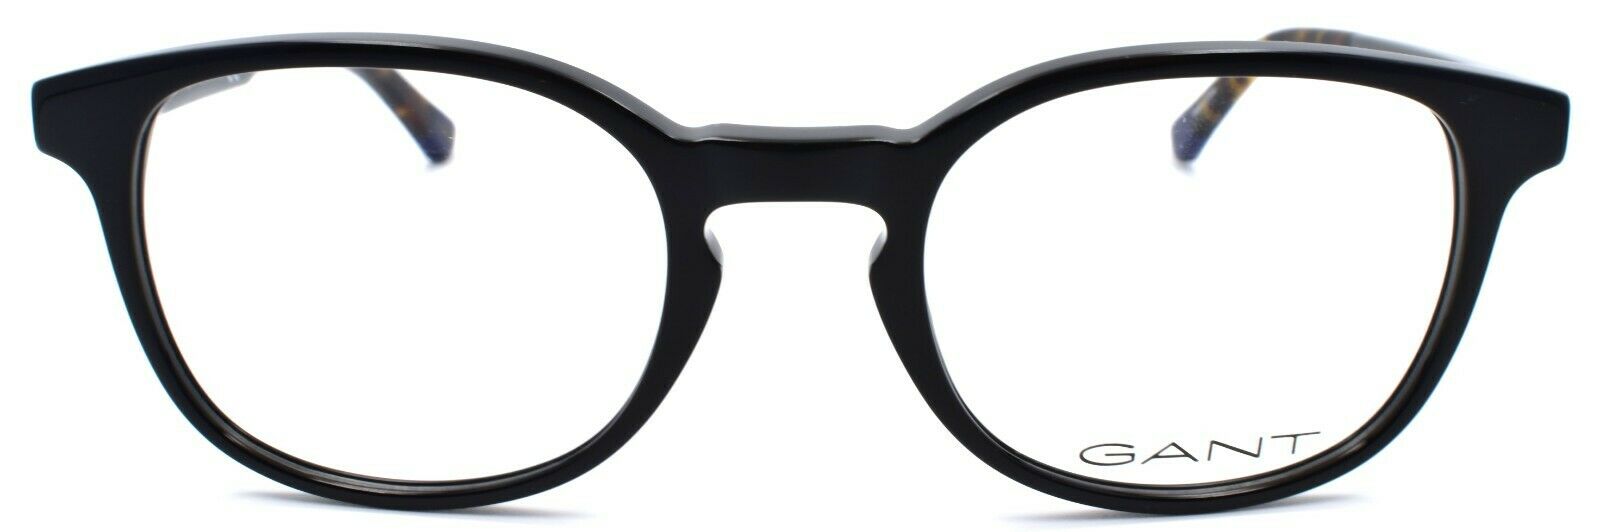 2-GANT GA3200 001 Men's Eyeglasses Frames 50-21-145 Black-889214106957-IKSpecs